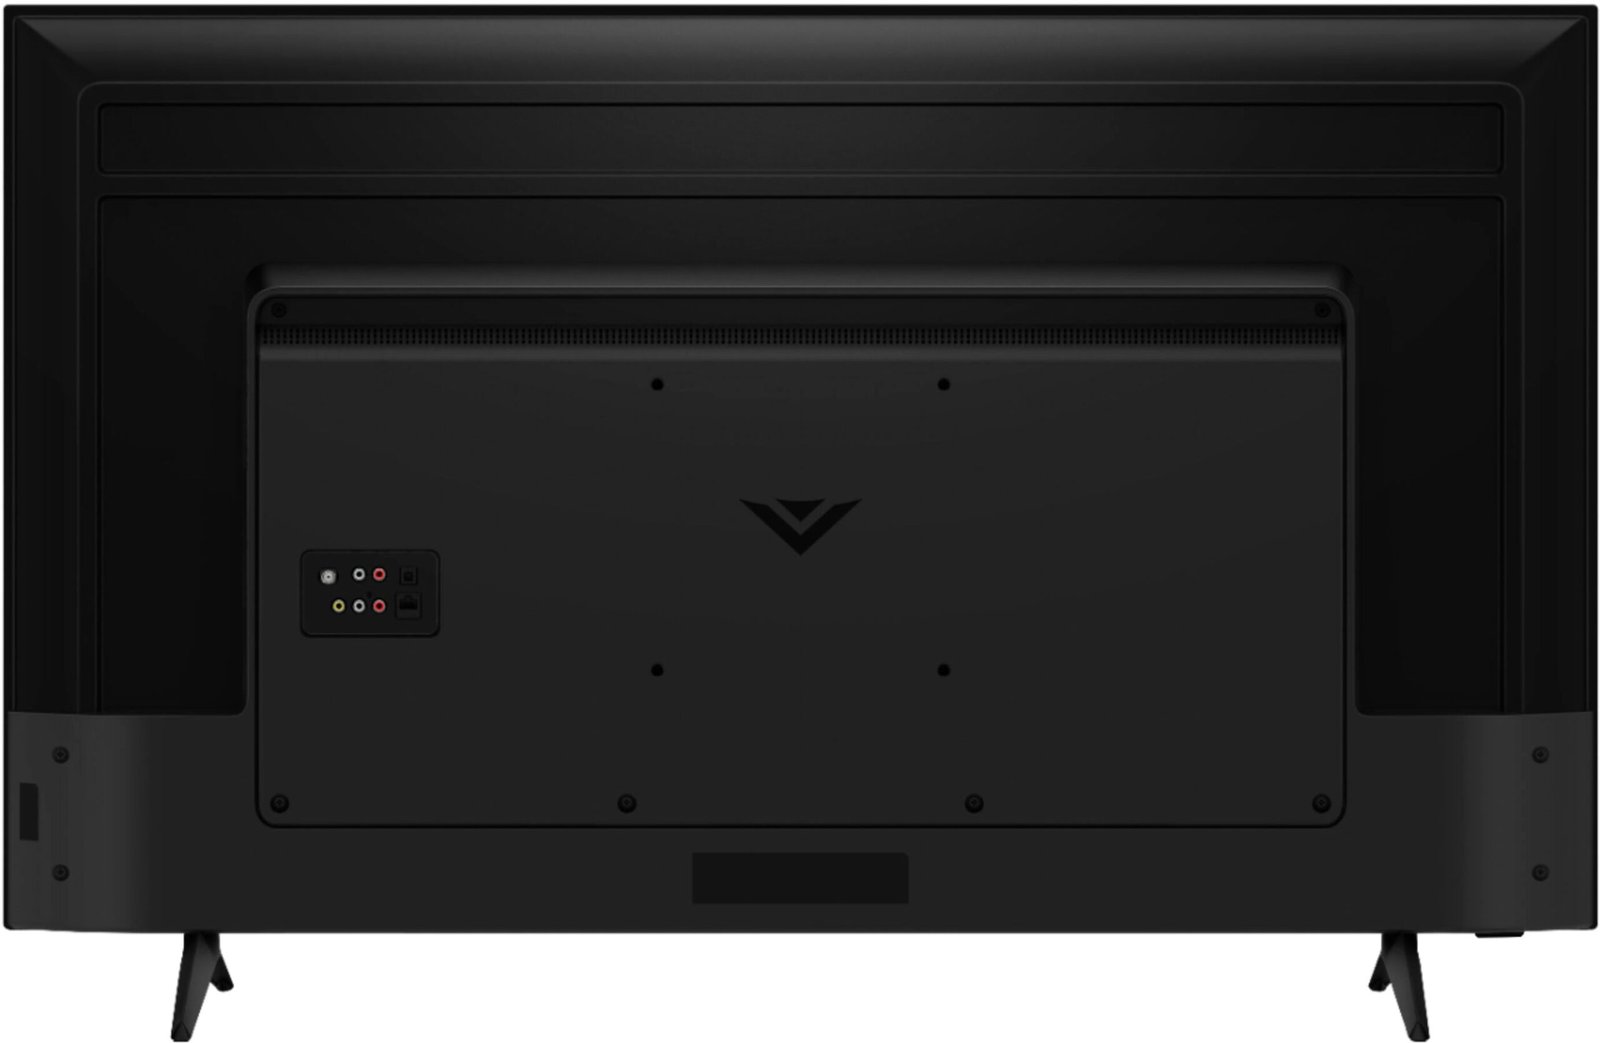 P-Series Quantum X 4K HDR Smart TV